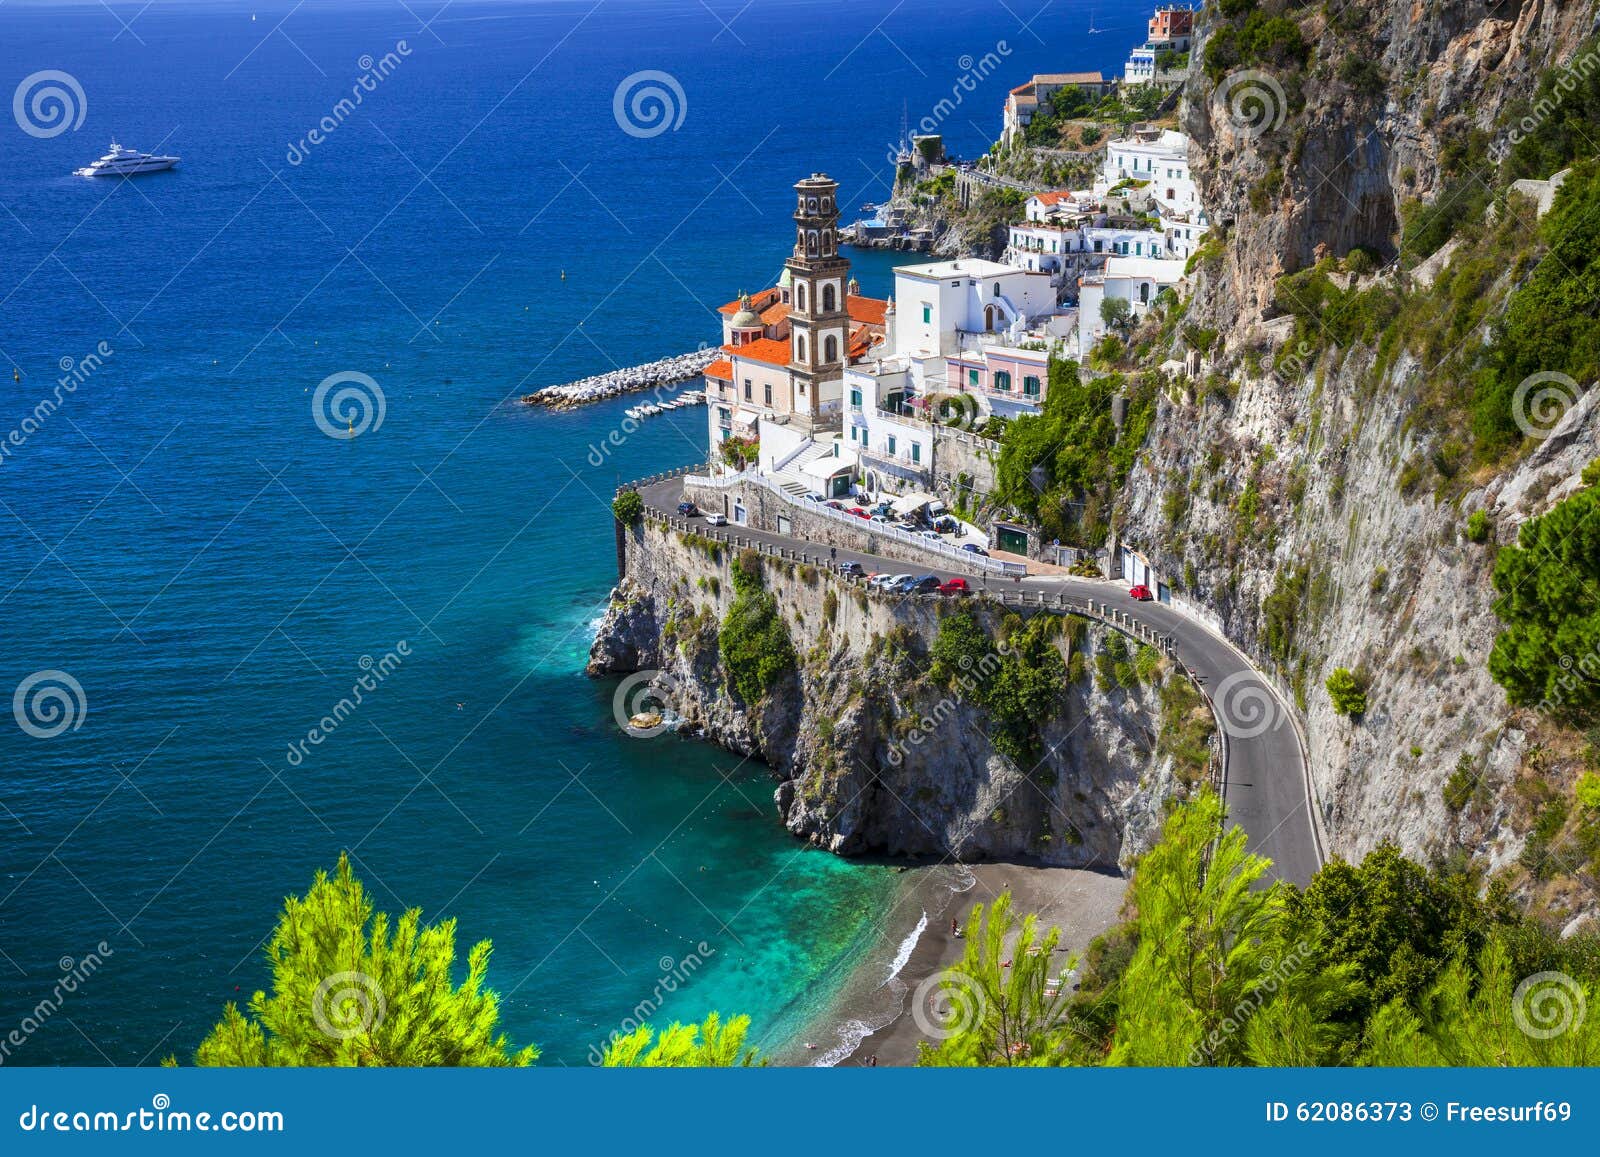 beautiful amalfi coast of italy - view of atrani